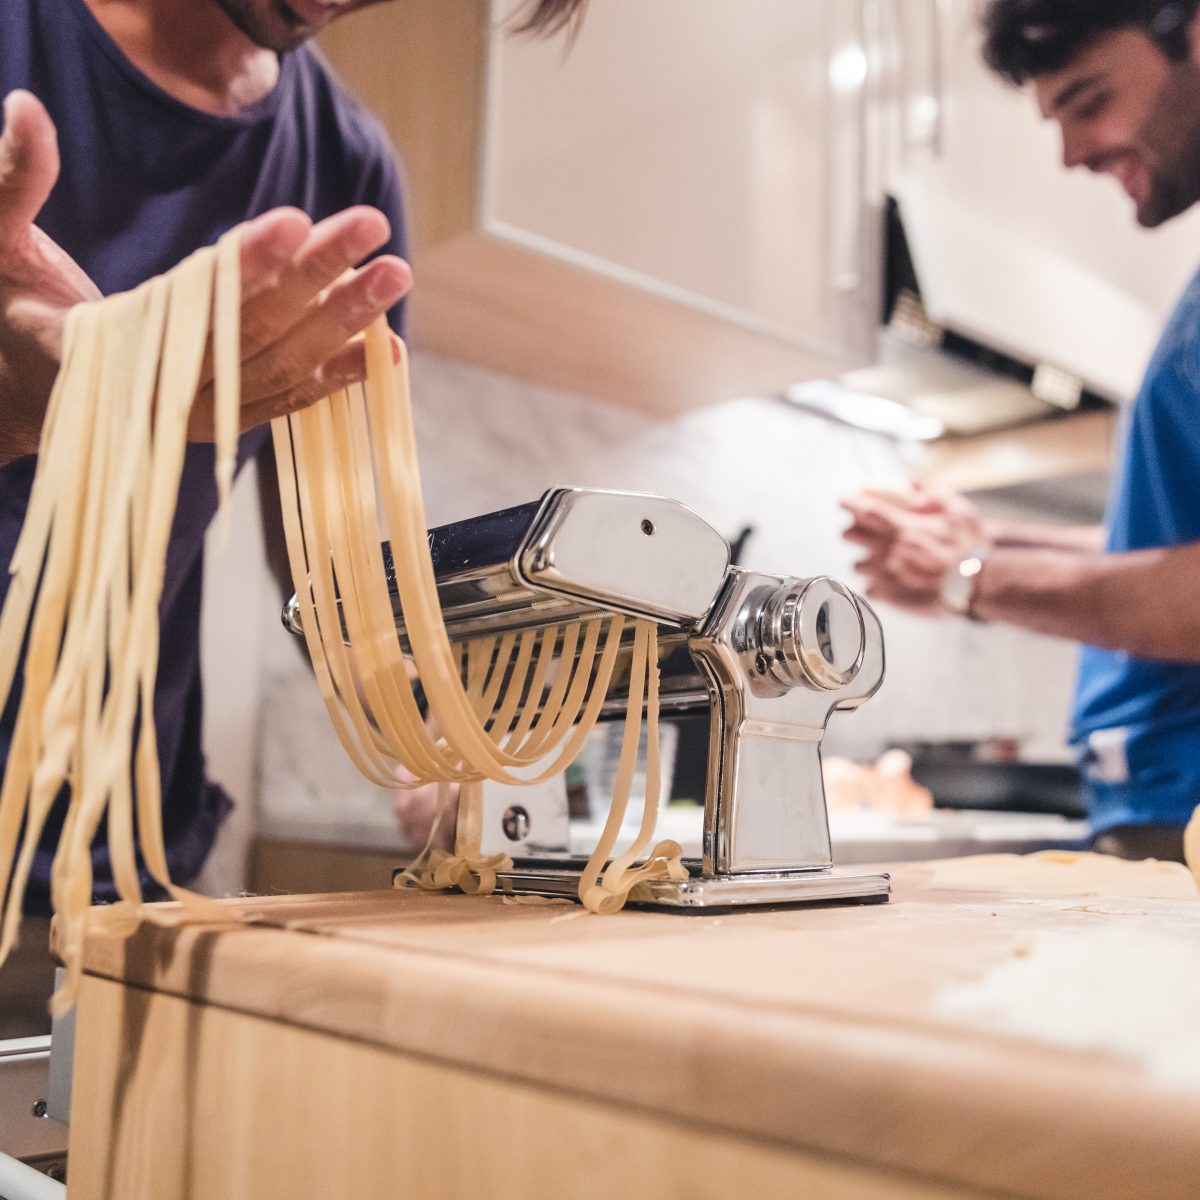 KISKA product management consultant making fresh pasta with apparel designer